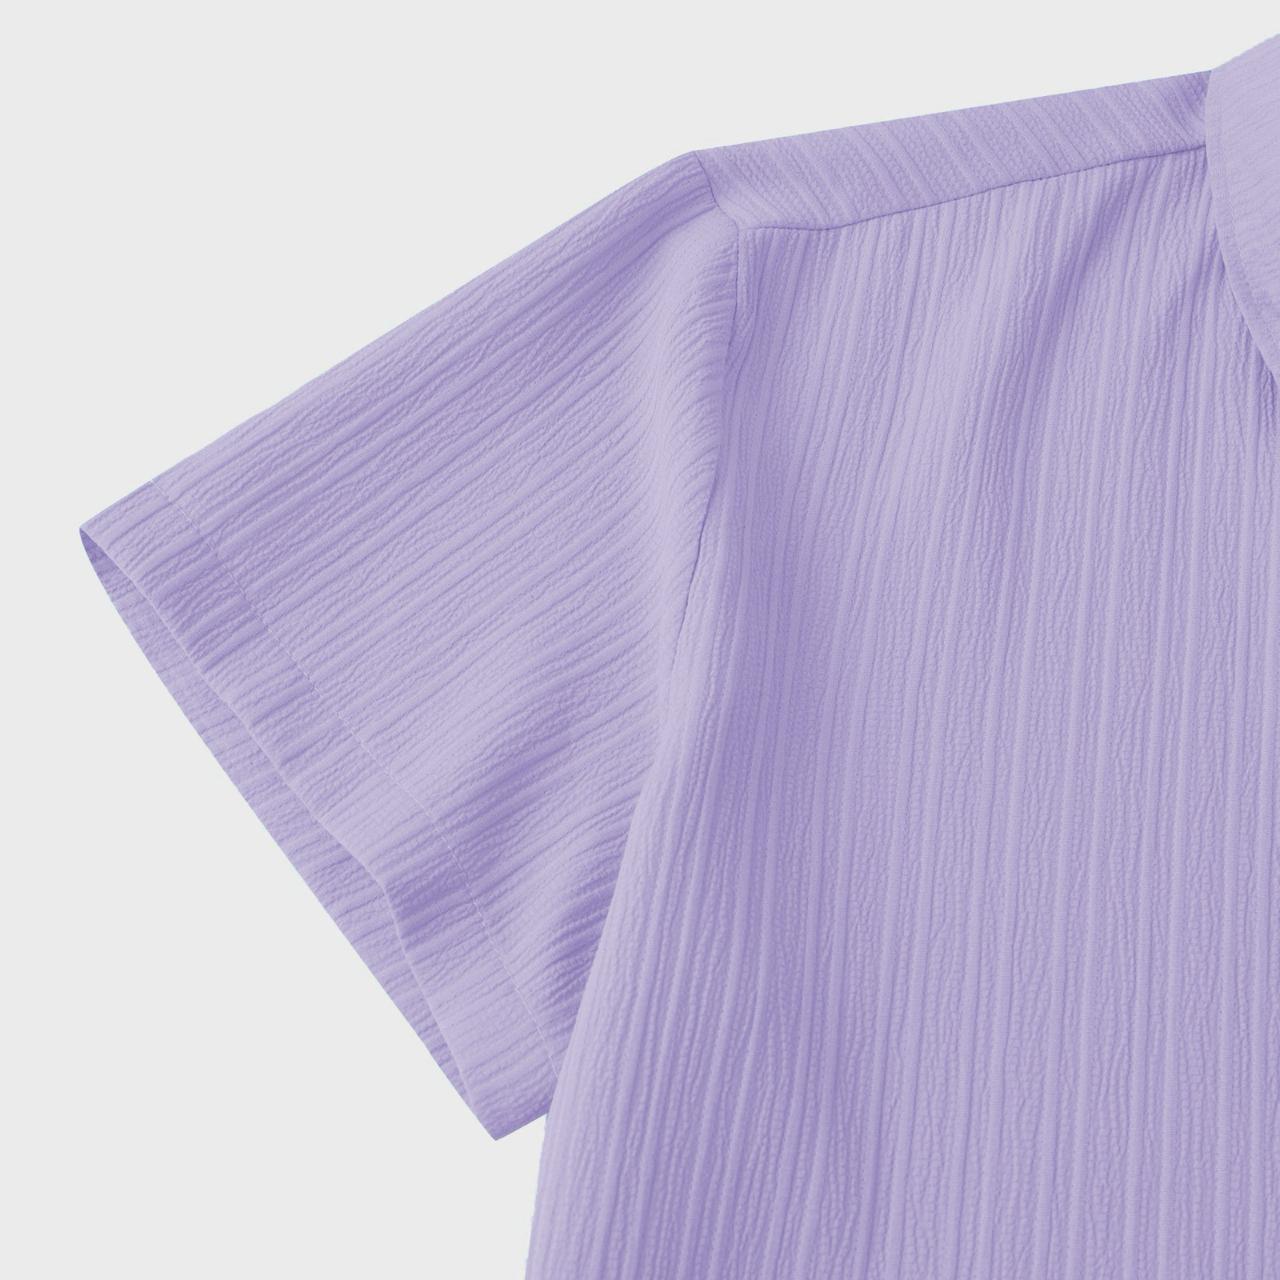 Lavender Colour Premium Lining Structured Short Sleeve Shirt